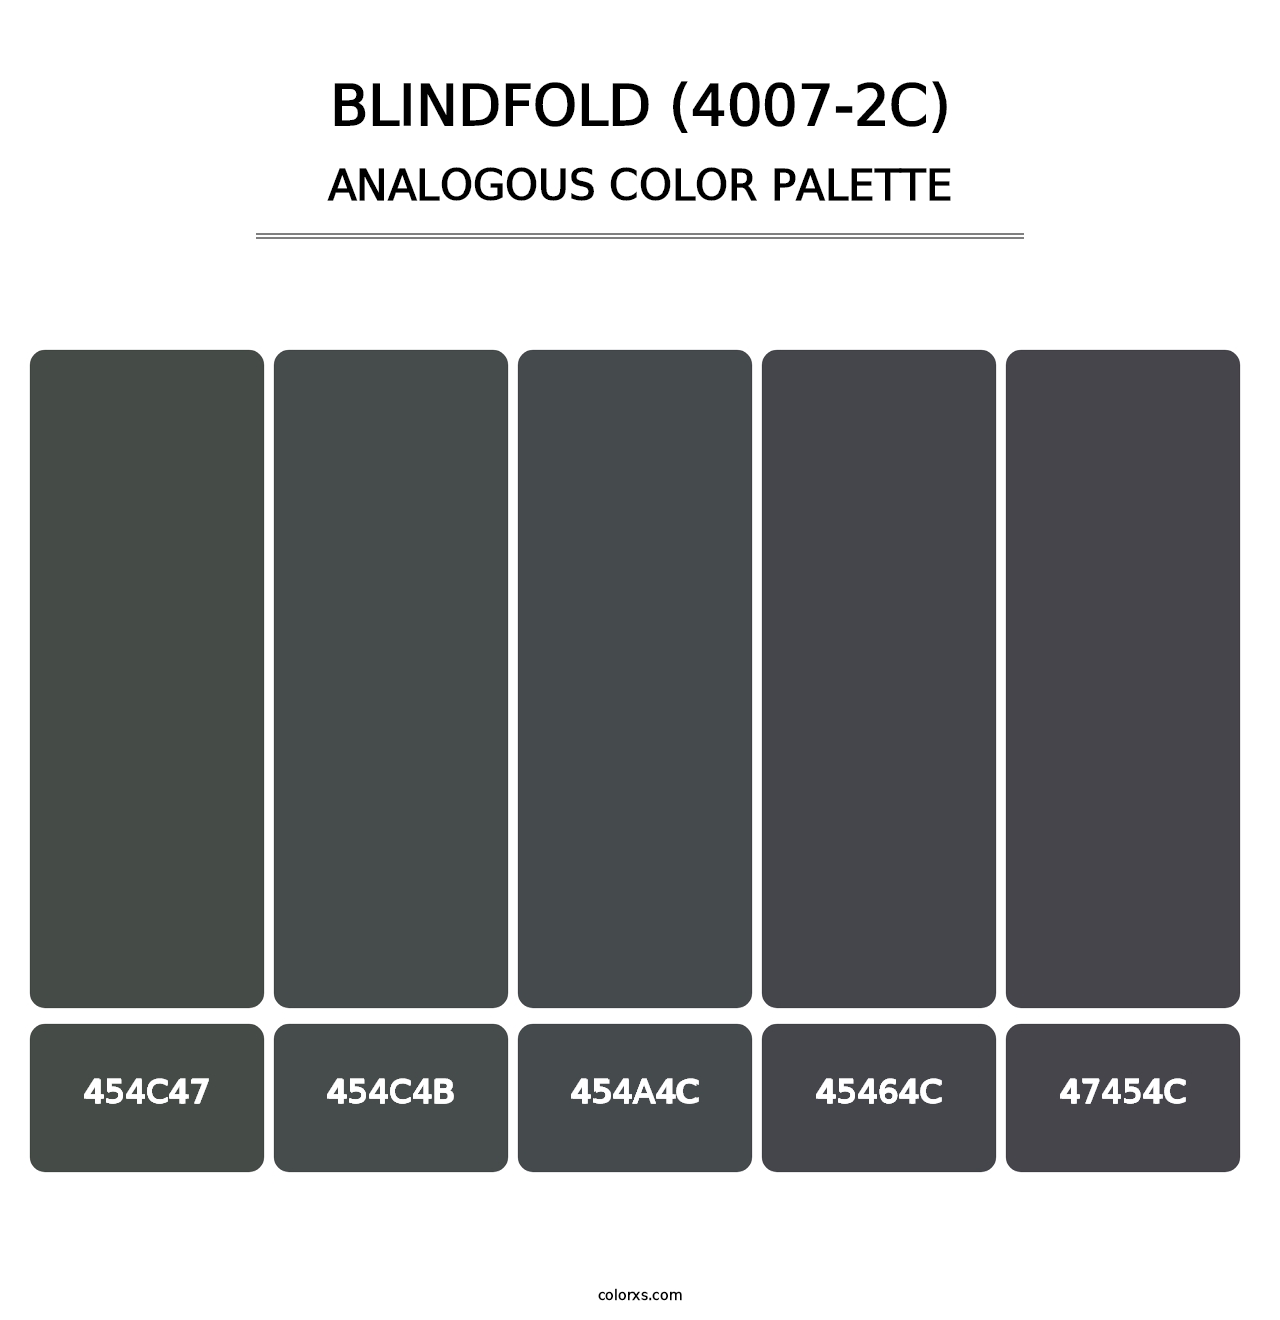 Blindfold (4007-2C) - Analogous Color Palette